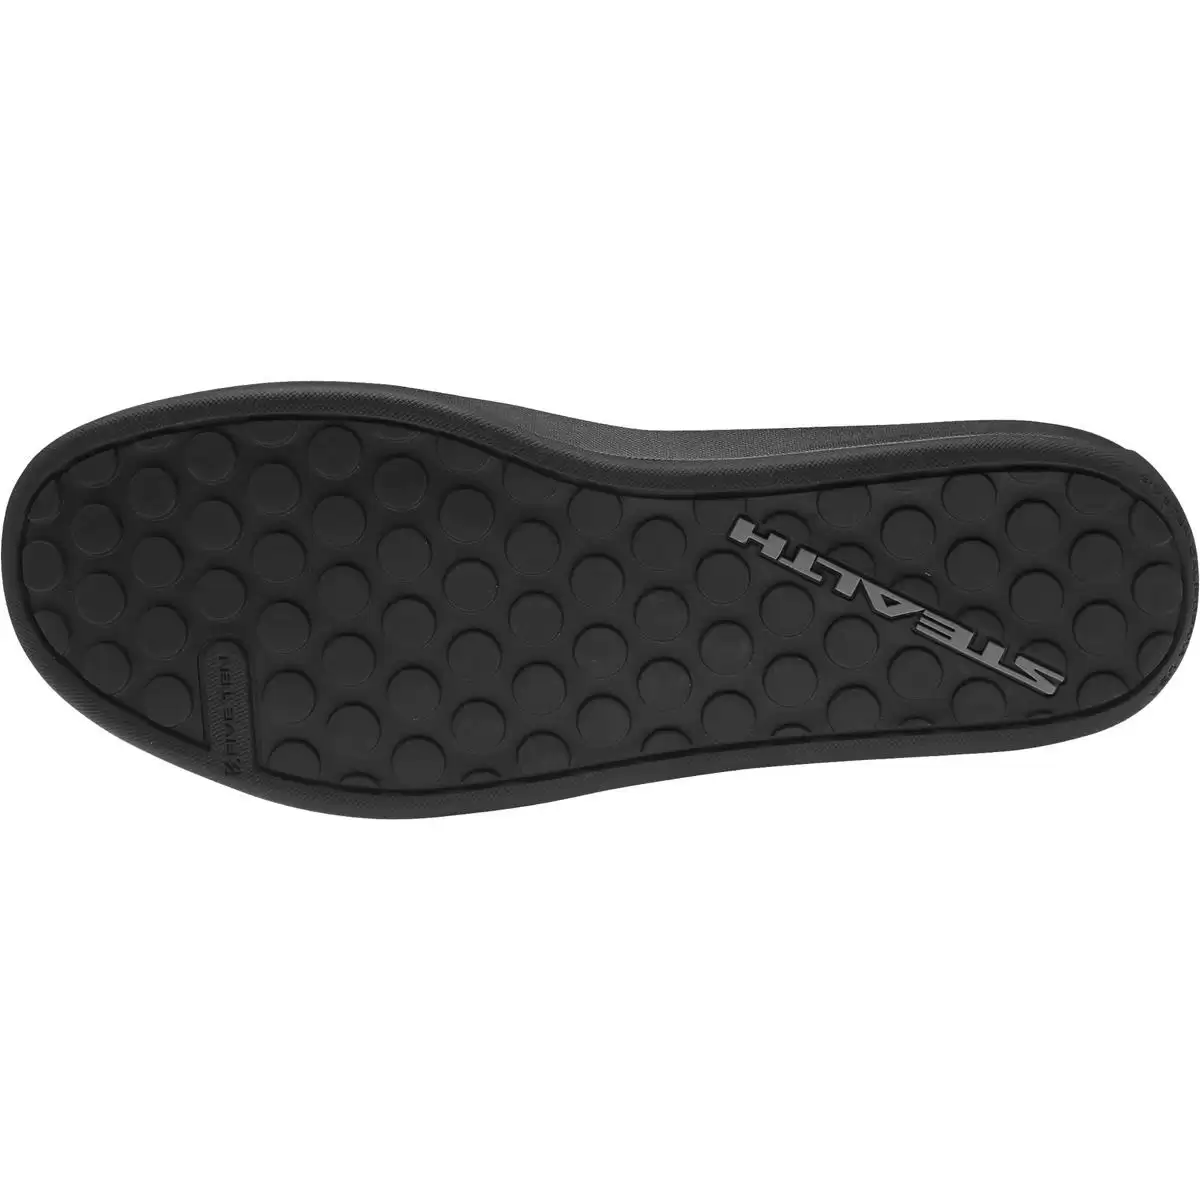 Zapatillas MTB Freerider Pro Primeblue Negro/Amarillo Talla 40 #4